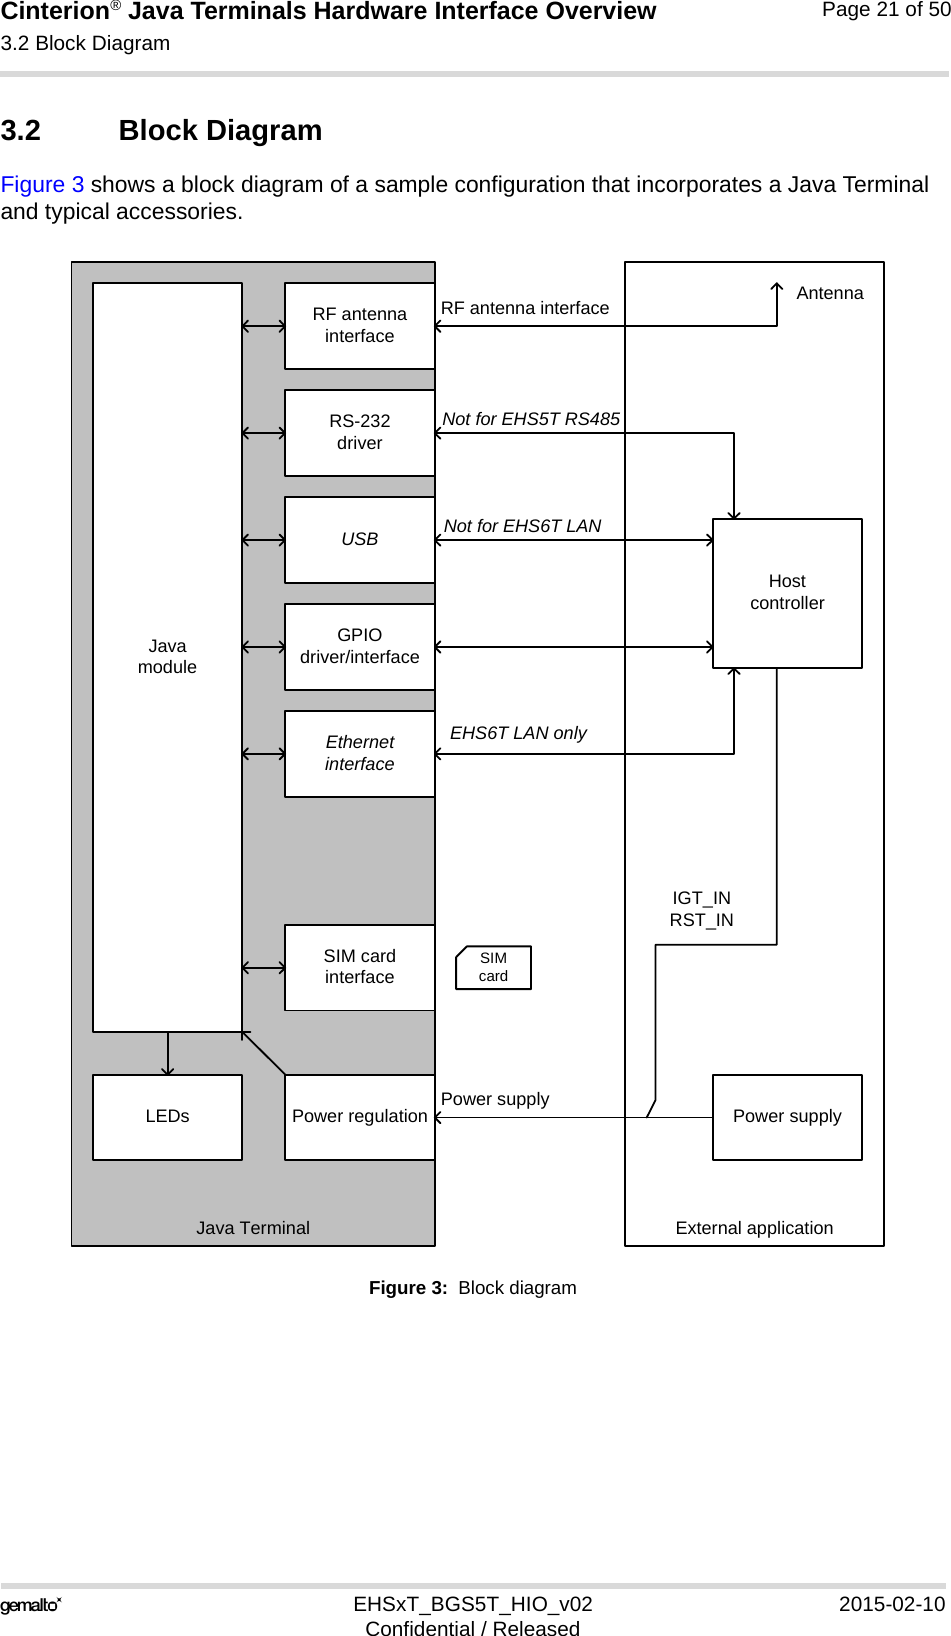 Cinterion® Java Terminals Hardware Interface Overview3.2 Block Diagram39EHSxT_BGS5T_HIO_v02 2015-02-10Confidential / ReleasedPage 21 of 503.2 Block DiagramFigure 3 shows a block diagram of a sample configuration that incorporates a Java Terminal and typical accessories.Figure 3:  Block diagramJava TerminalJavamoduleRS-232driverUSBSIM cardinterfacePower regulationRF antennainterfaceLEDsRF antenna interfaceHostcontrollerPower supplyExternal applicationPower supplySIMcardAntennaIGT_INRST_INGPIOdriver/interfaceEthernetinterfaceEHS6T LAN onlyNot for EHS6T LANNot for EHS5T RS485